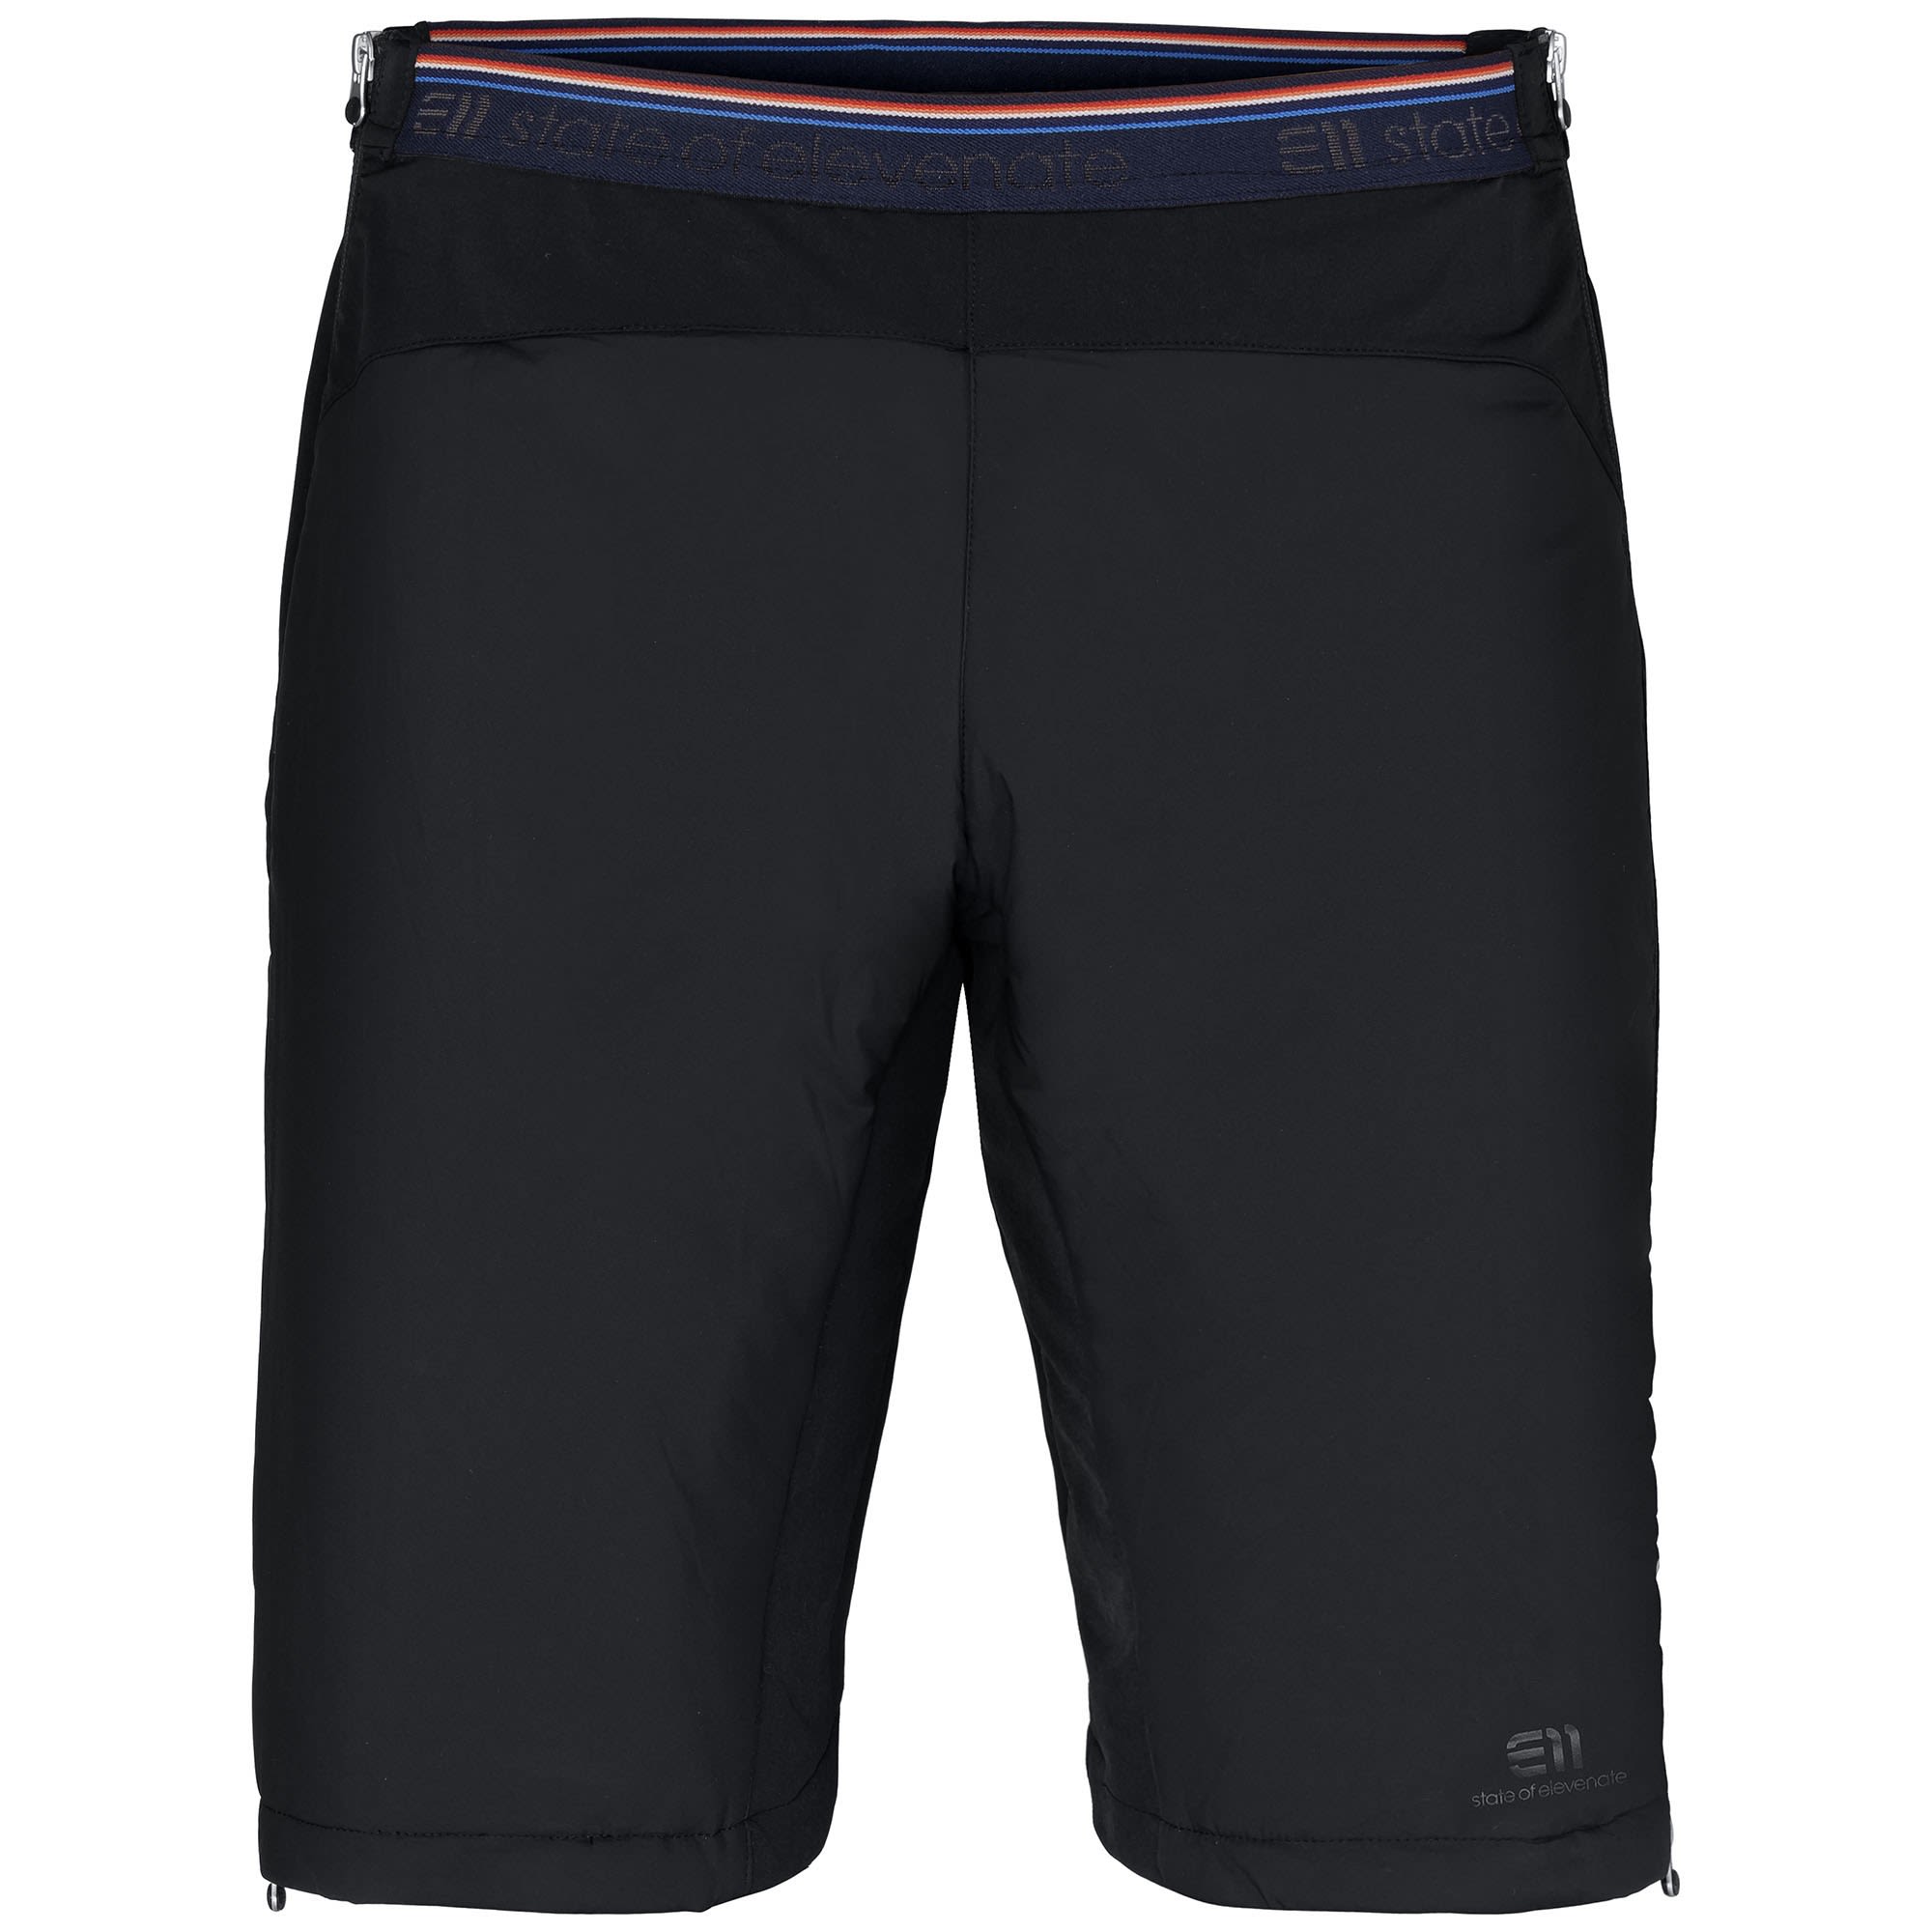 Elevenate Transition Shorts Schwarz- Male Daunen Shorts- Grsse L - Farbe Black unter Elevenate